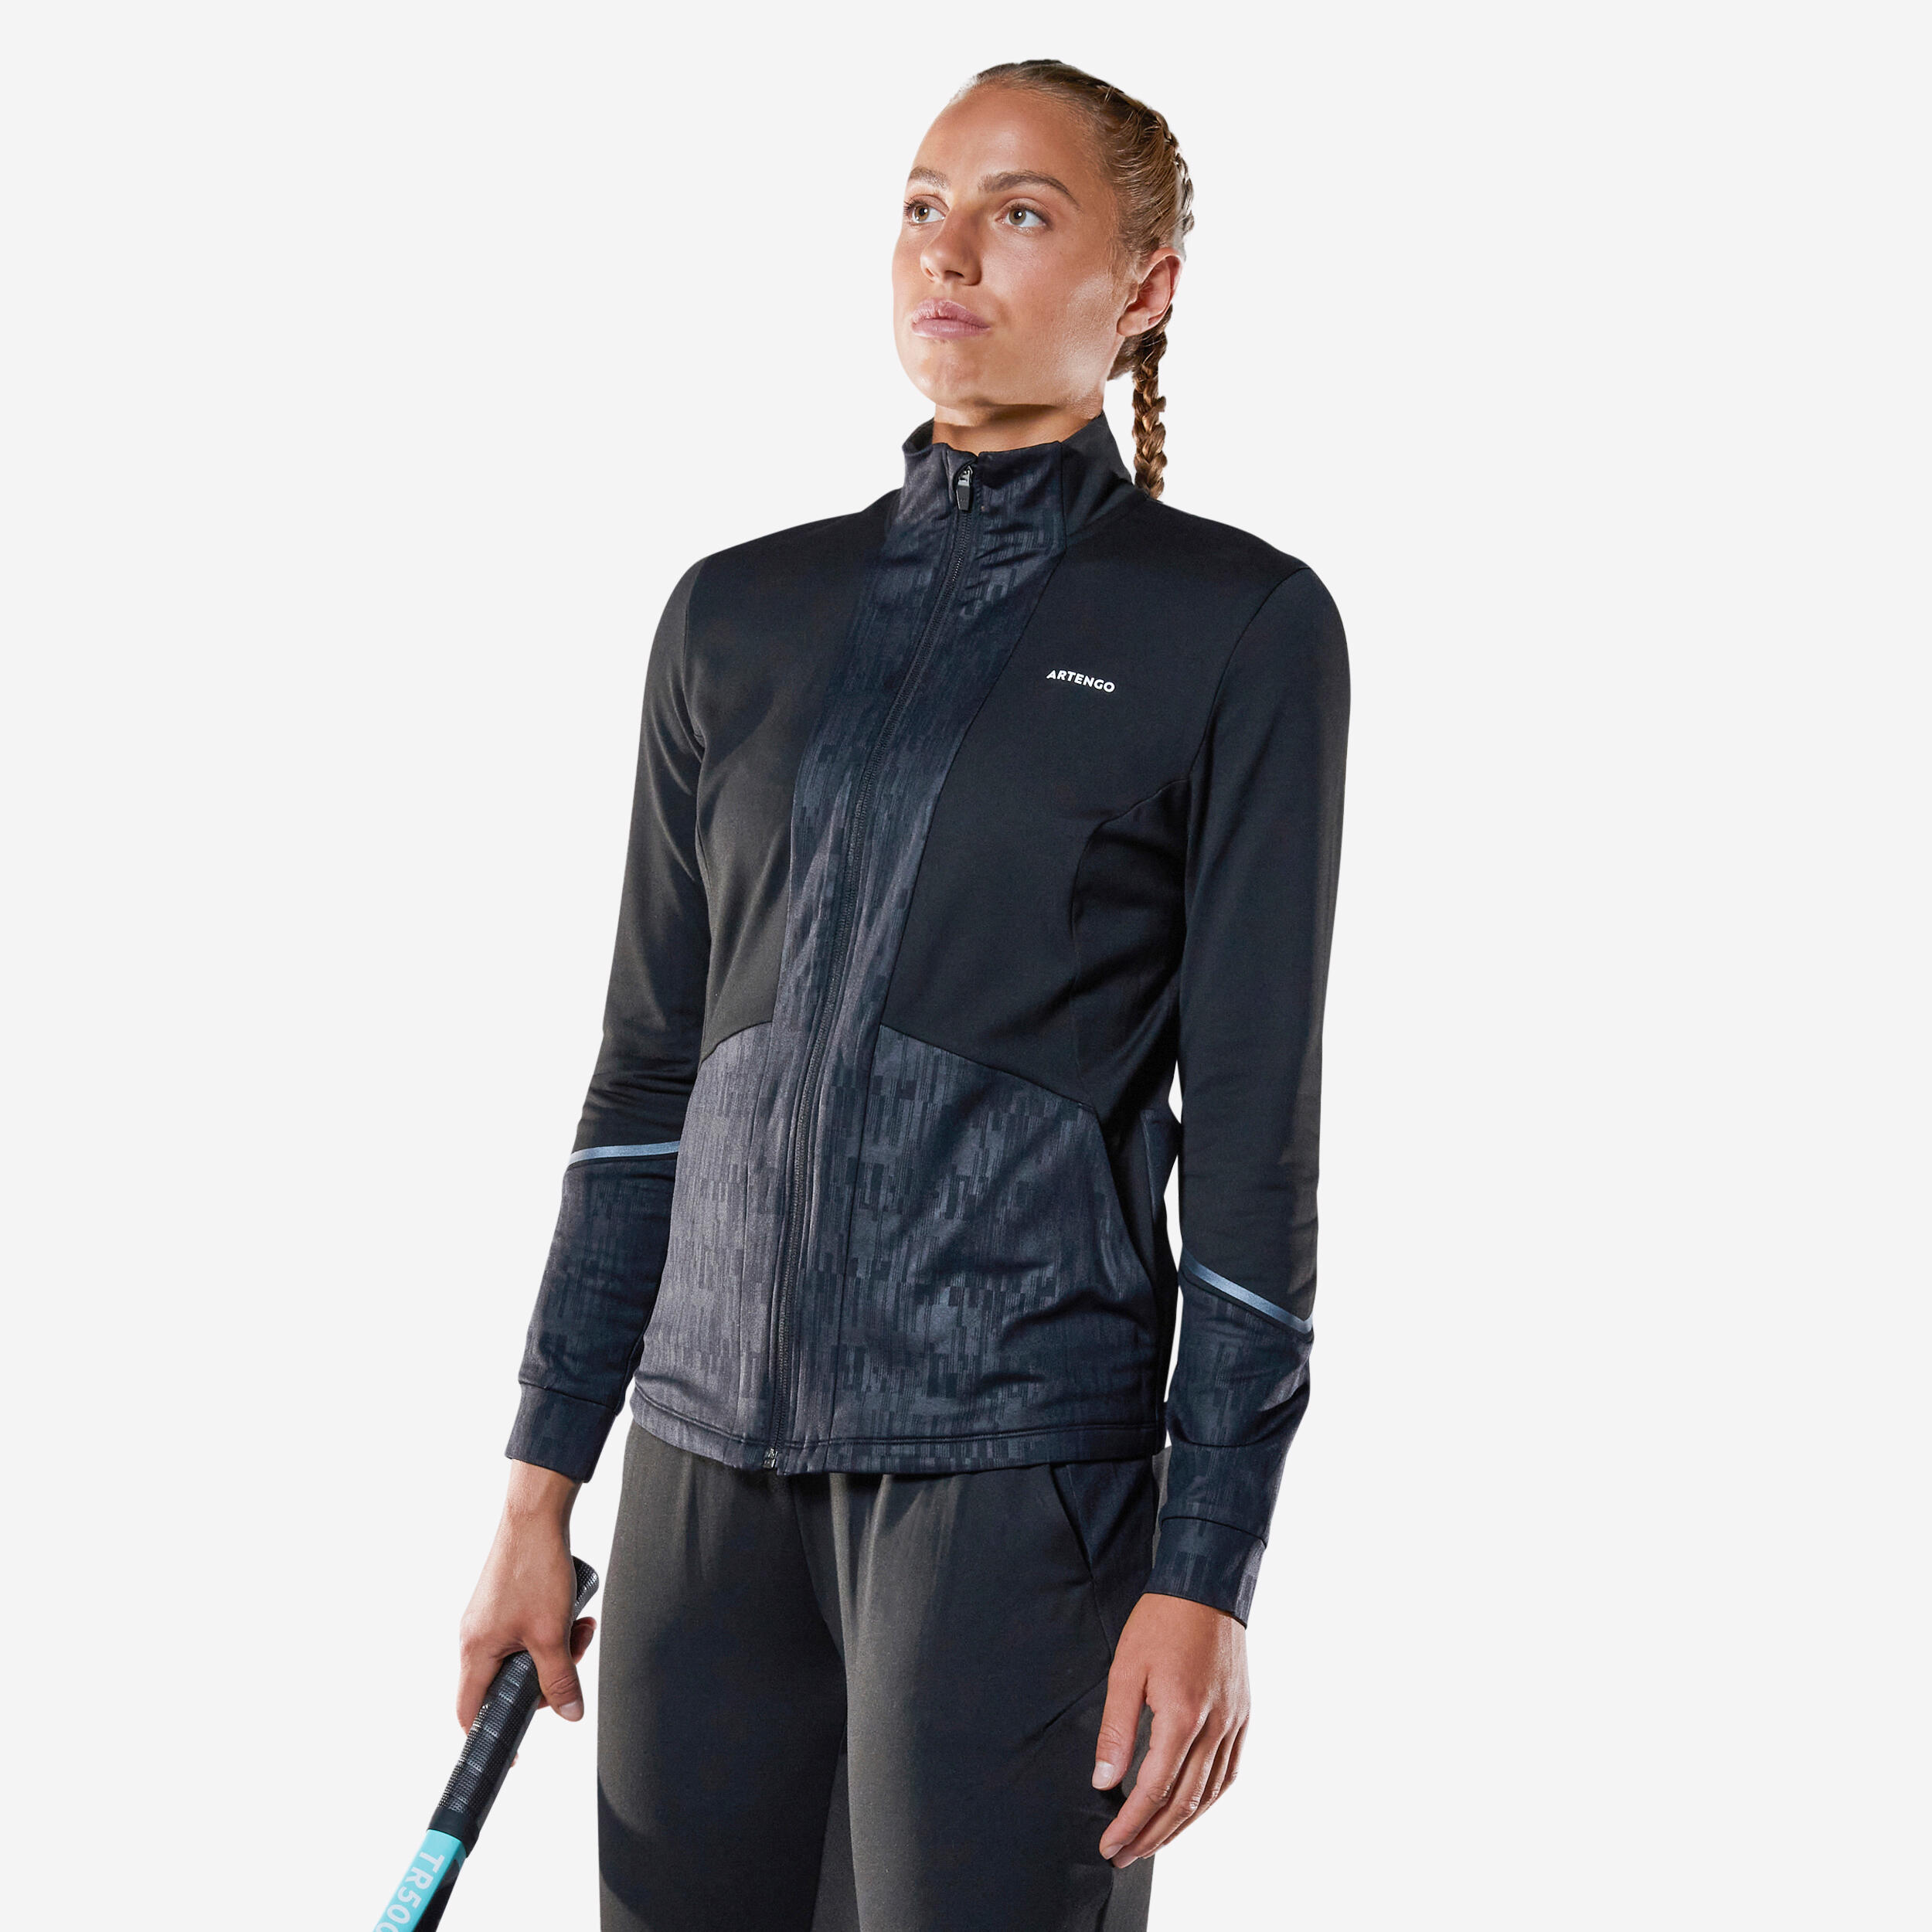 Women's Dry Thermal Tennis Jacket TH500 - Black ARTENGO